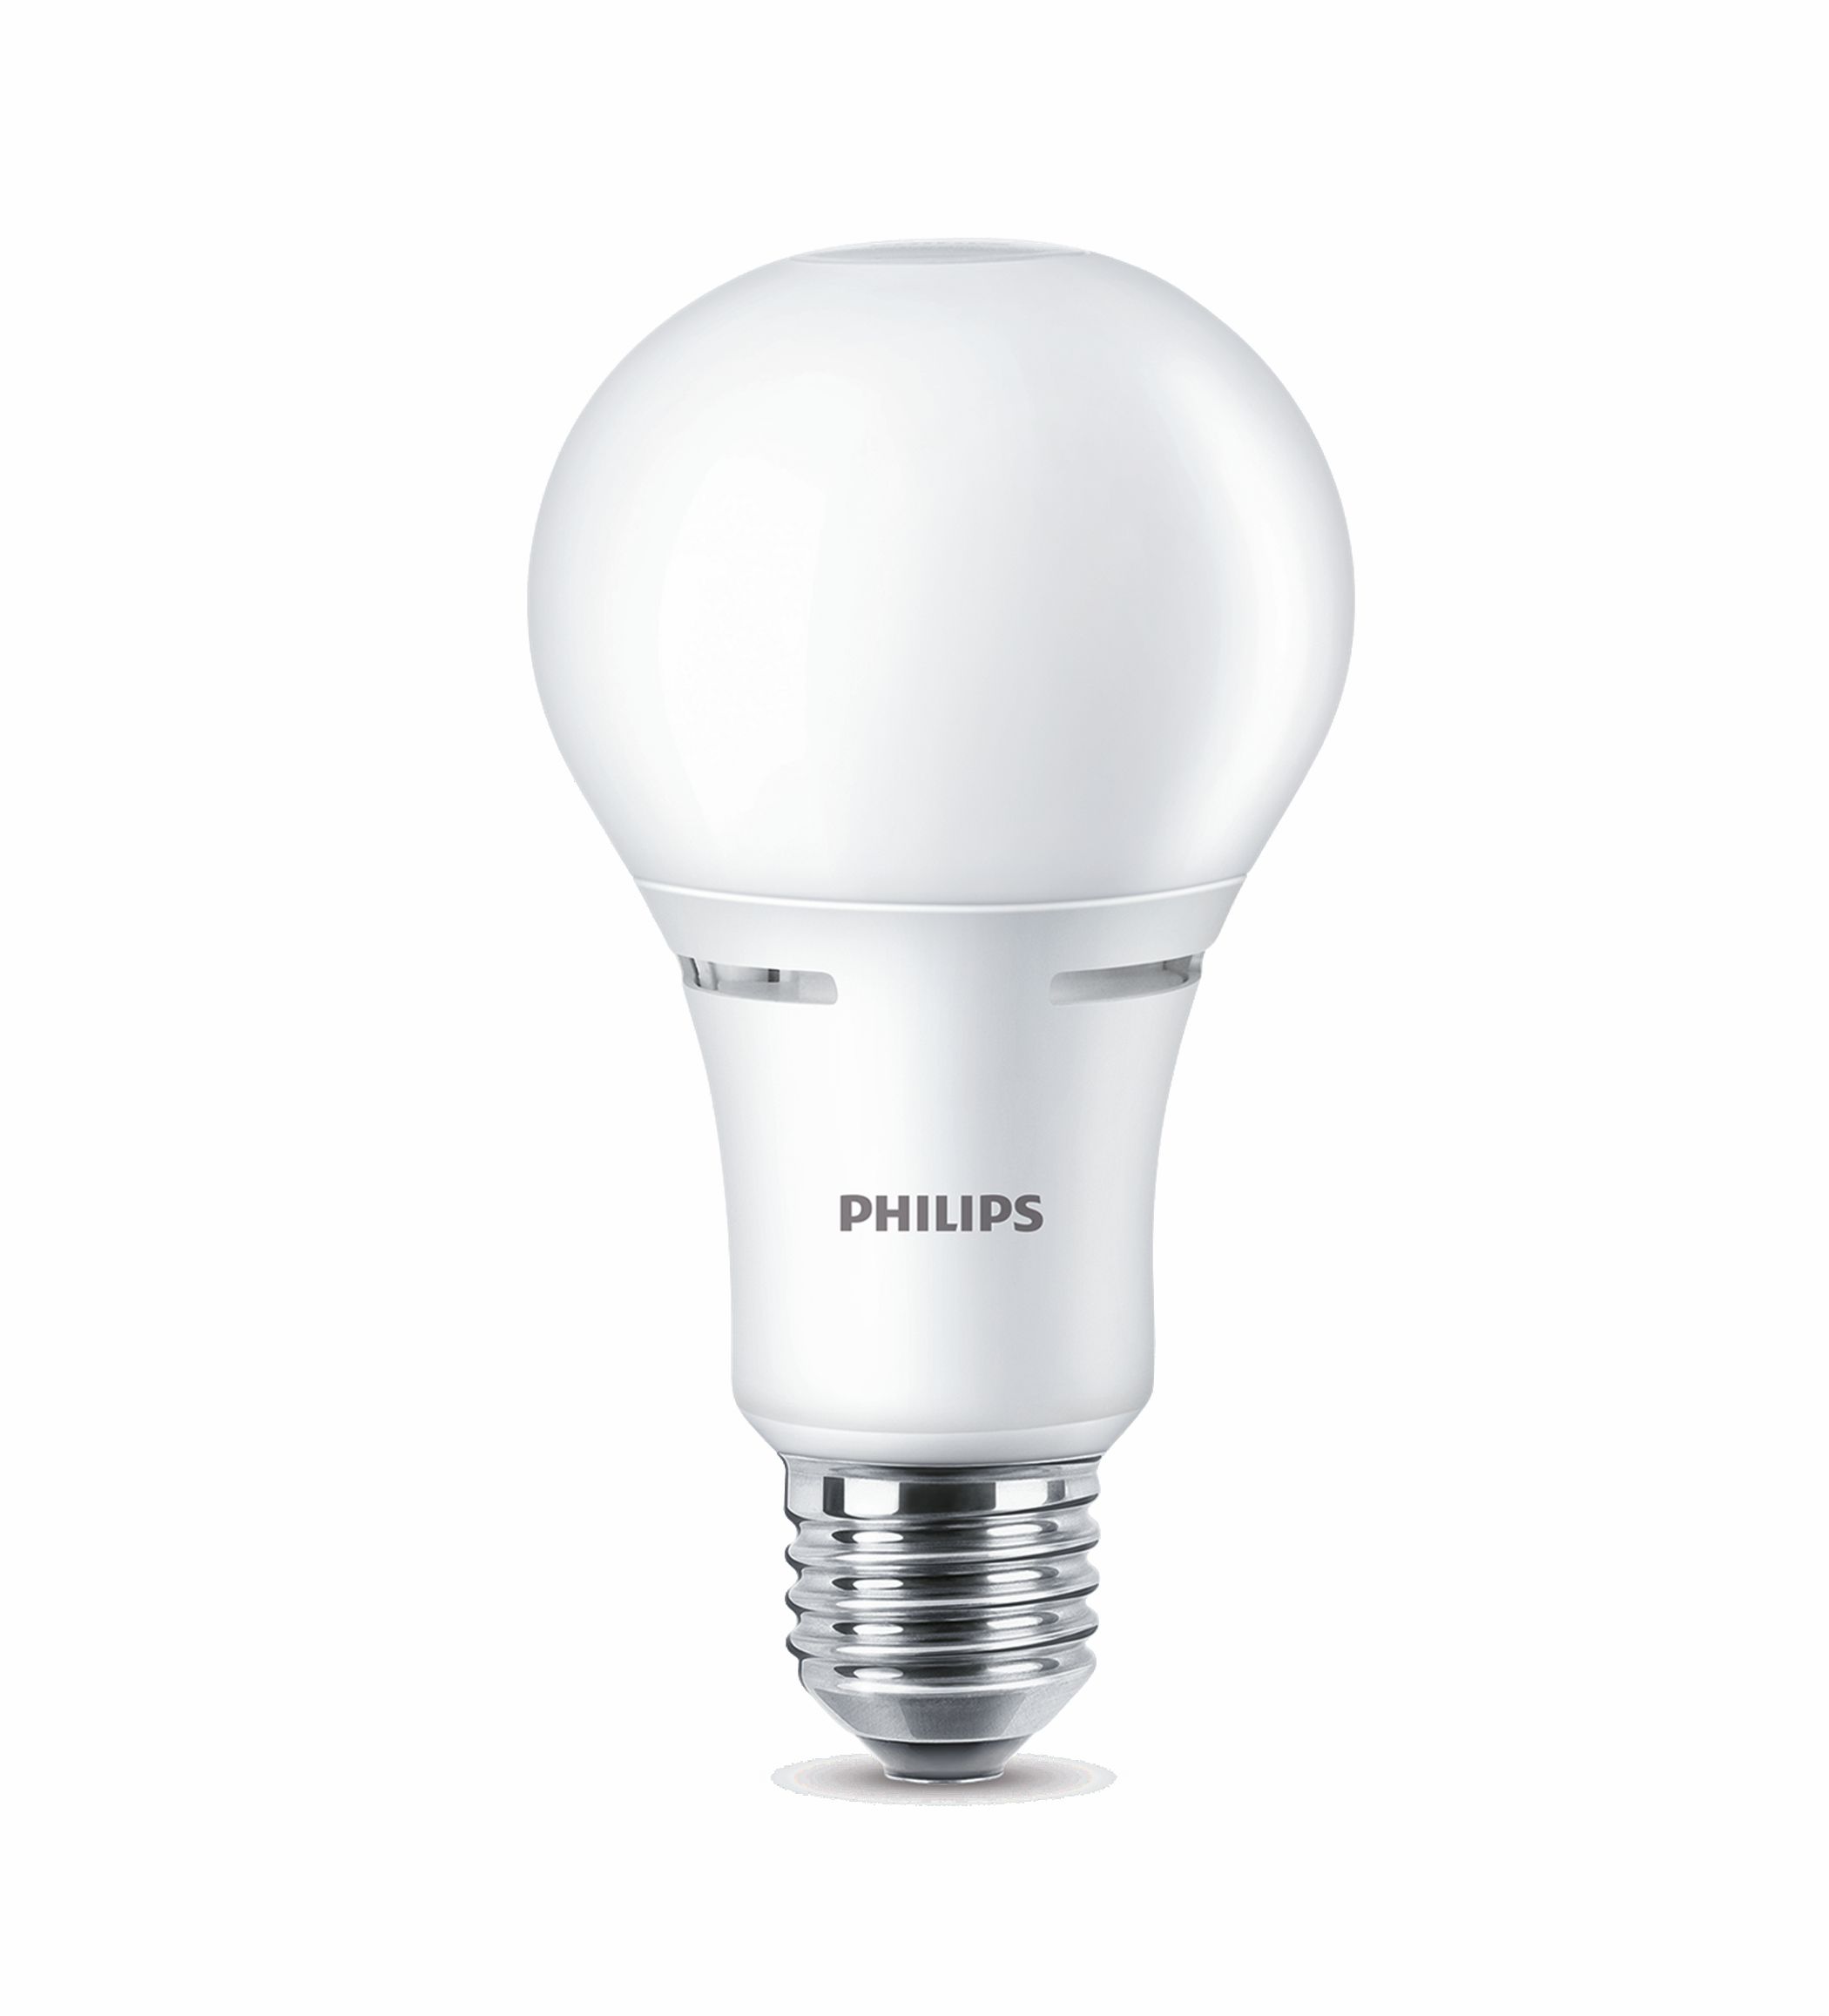 Correspondentie Kameraad zakdoek LED 3-Way | 7403332 | Philips lighting